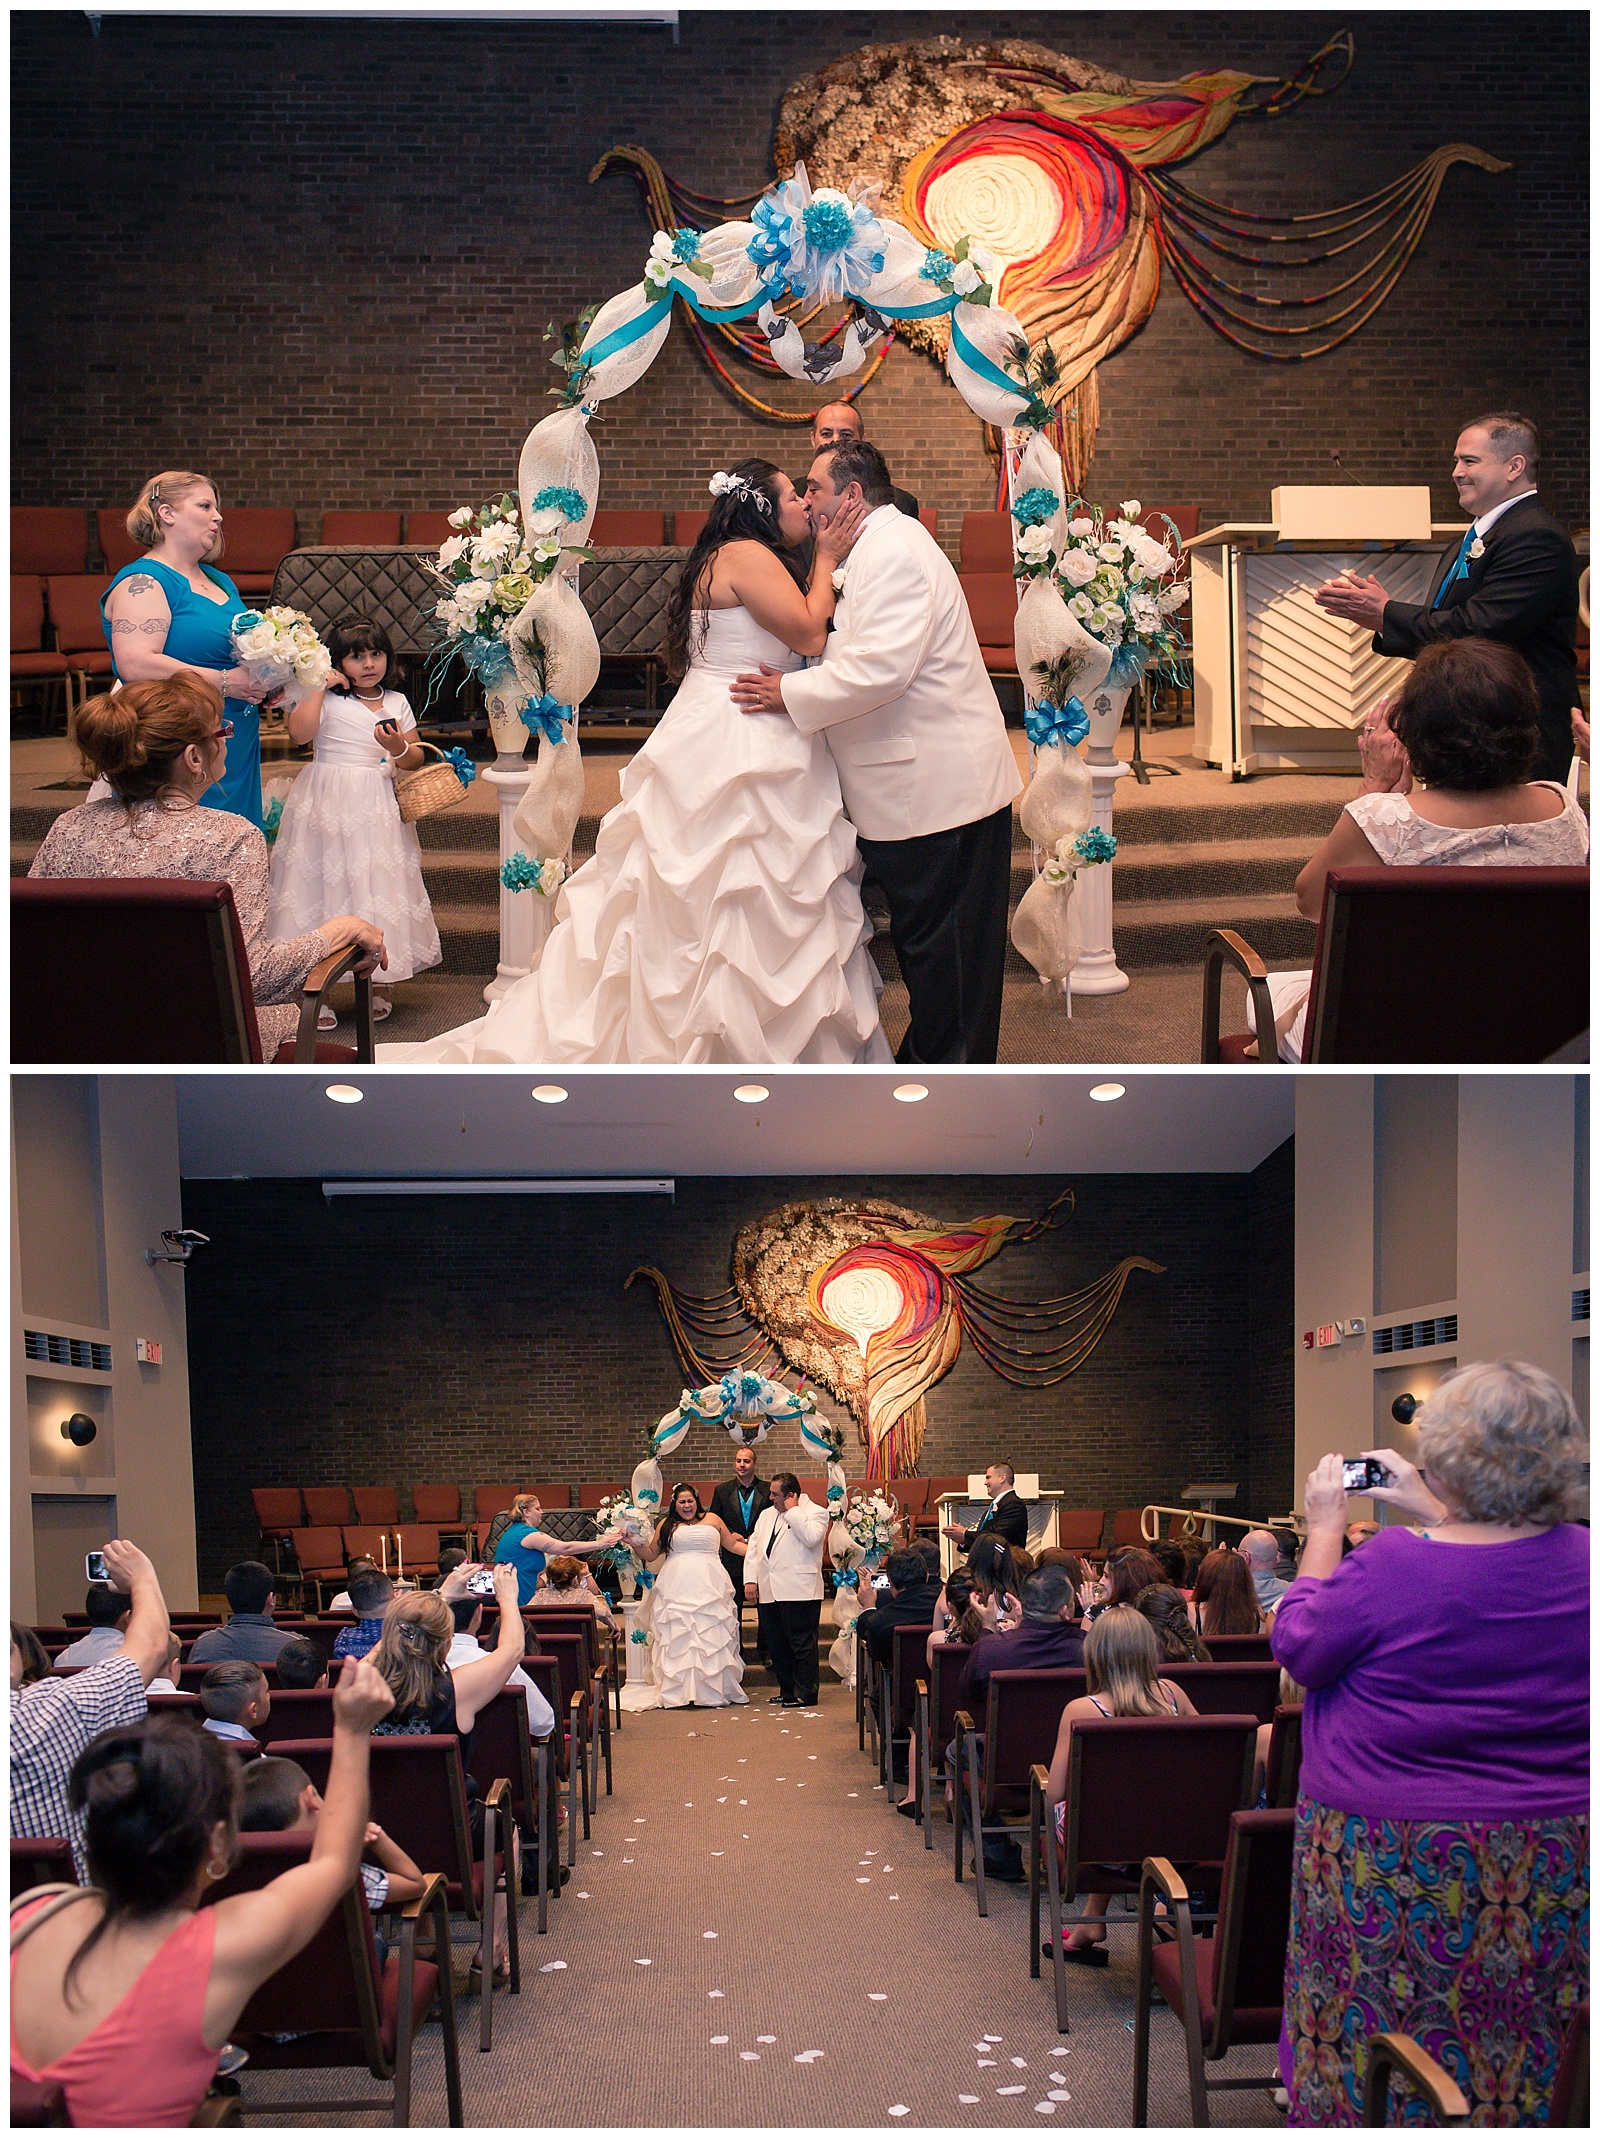 Wedding photography at All Souls Unitarian Universalist Church in Kansas City.